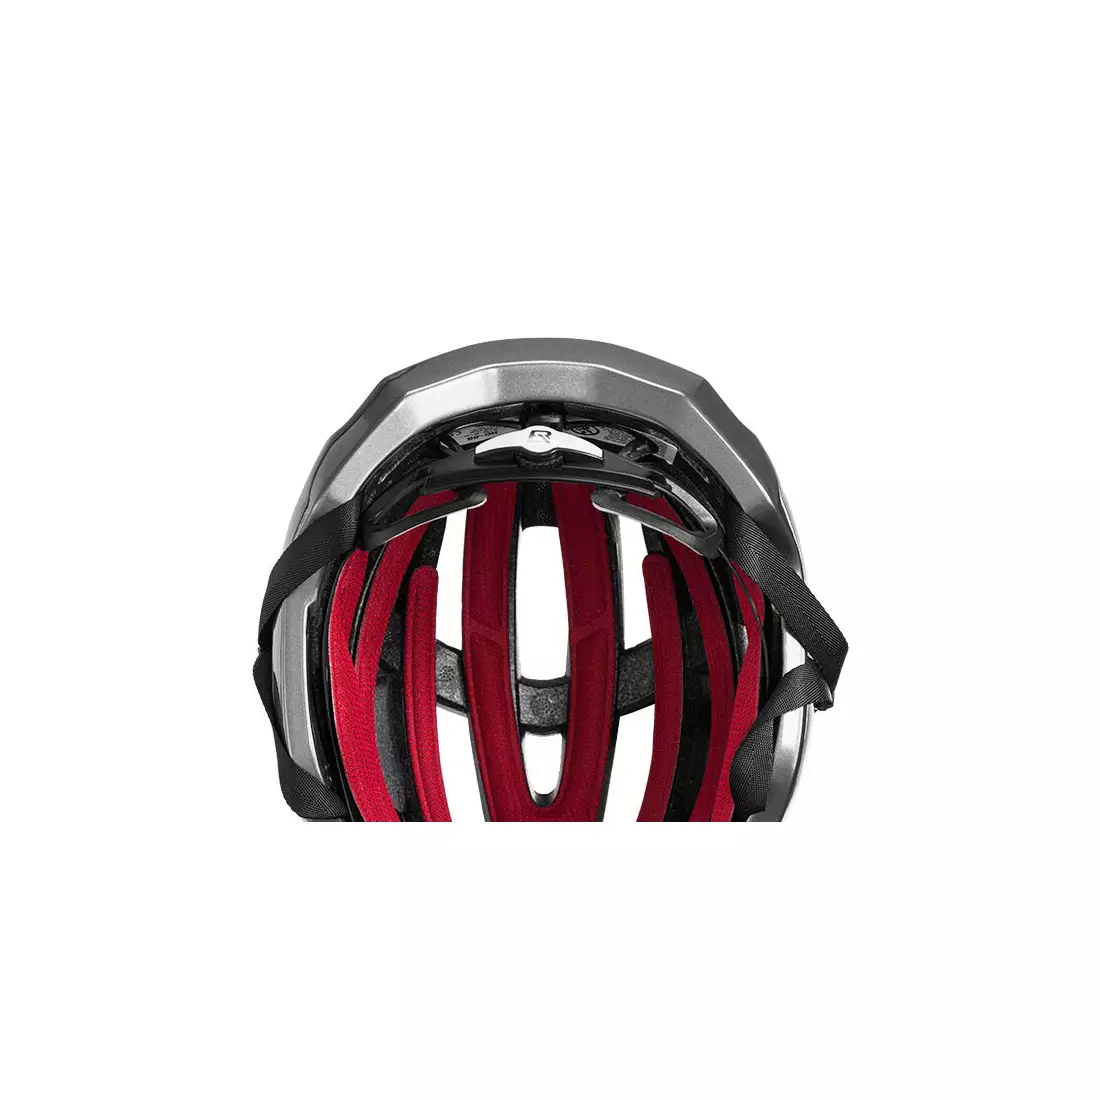 Rockbros Road bike helmet, dark red HC-58CR